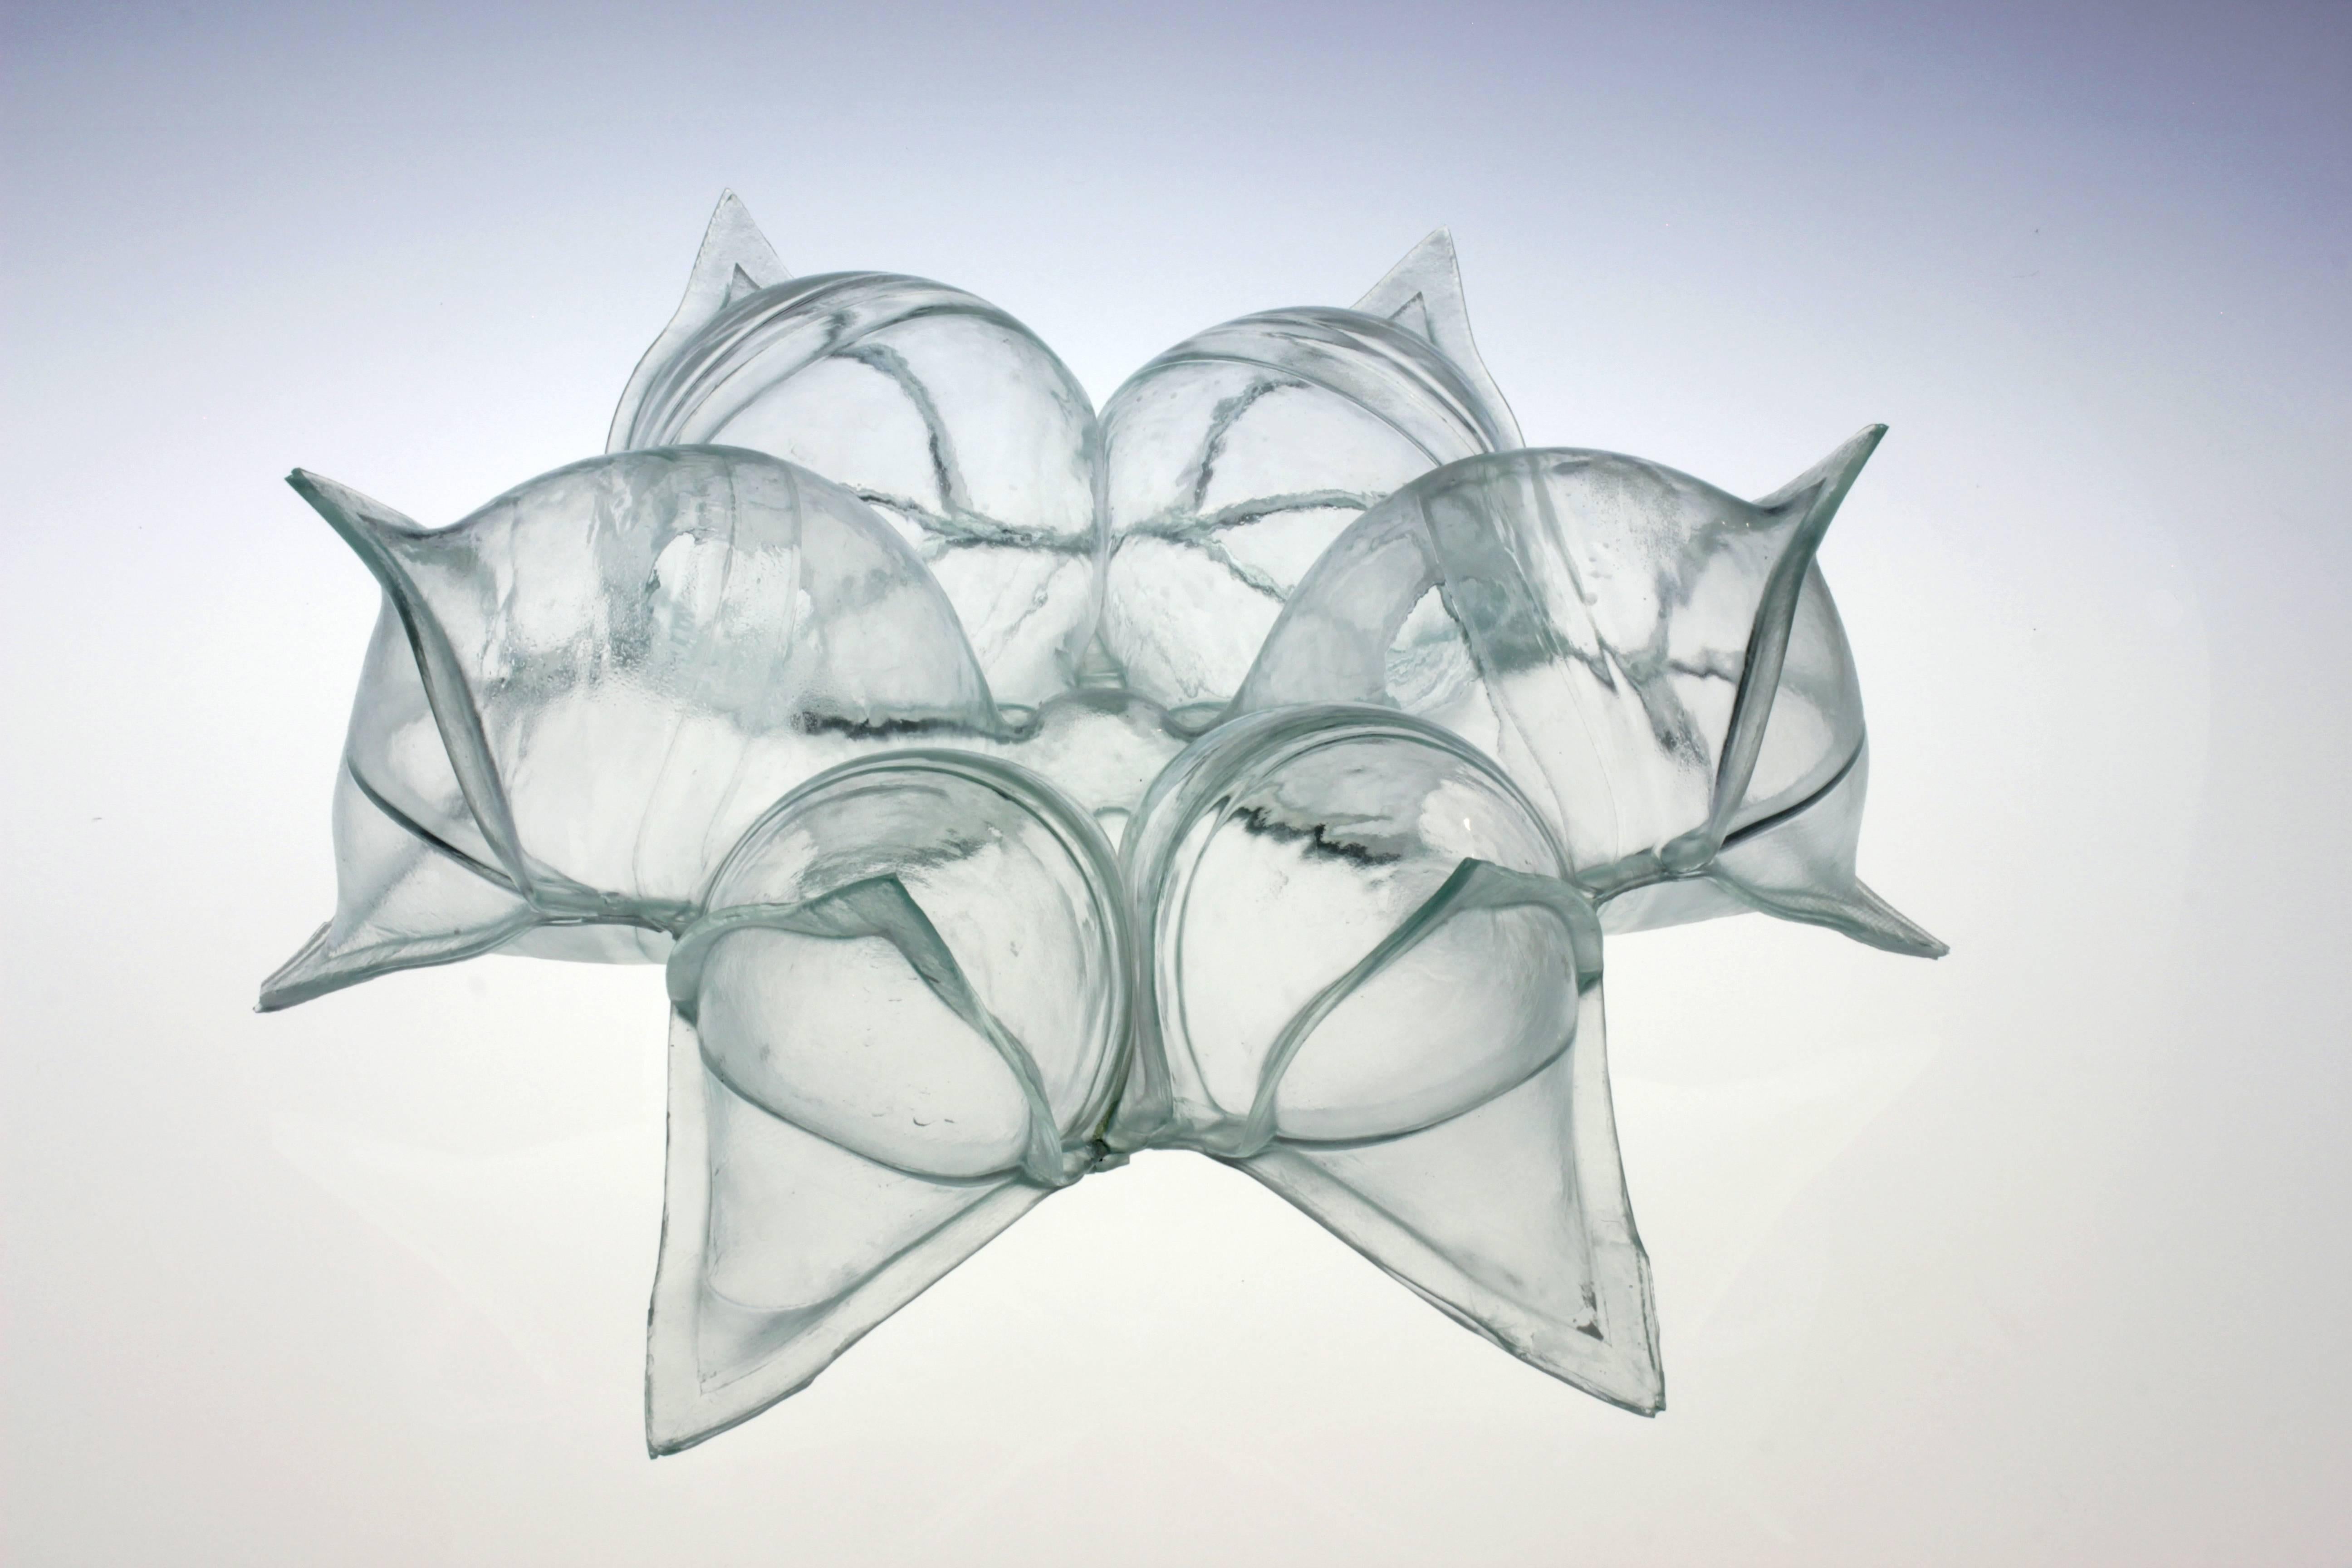 Matthew Szosz Abstract Sculpture -  Matthew Szösz, untitled (inflatable) no. 80, 2018, glass